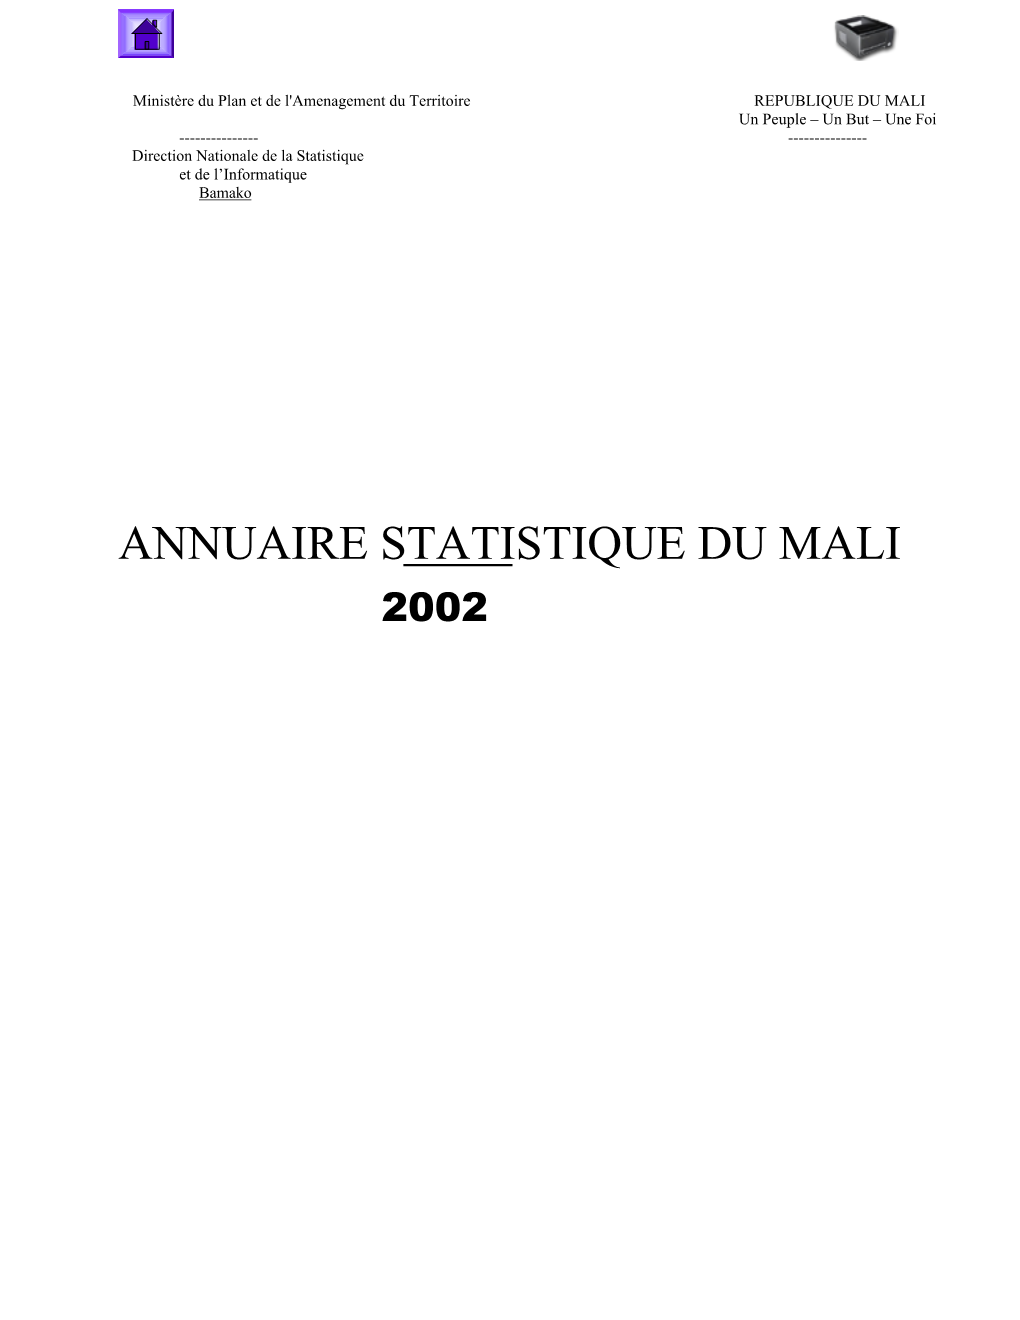 Annuaire Statistique Du Mali